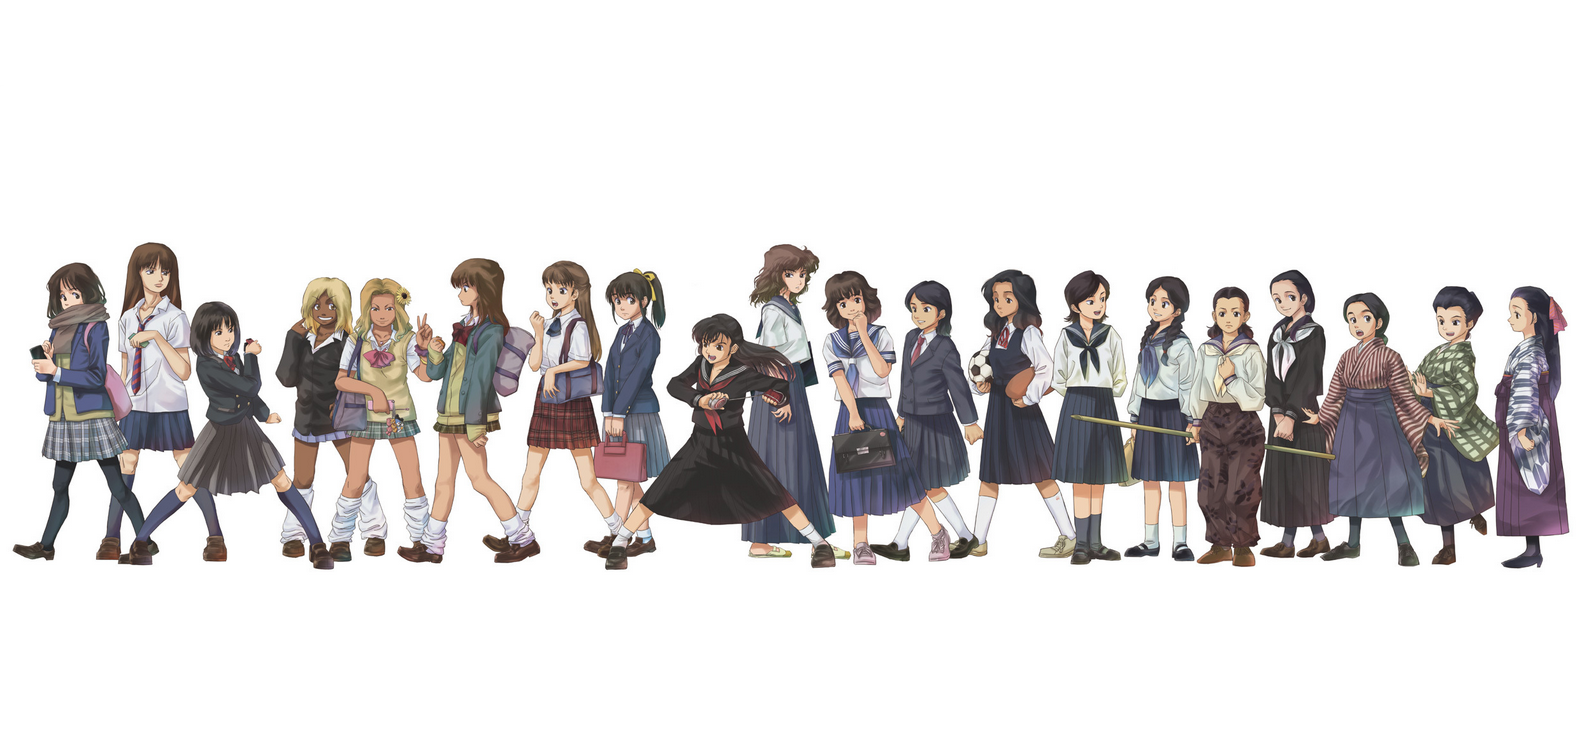 The Evolution Of Japanese Schoolgirl Uniforms